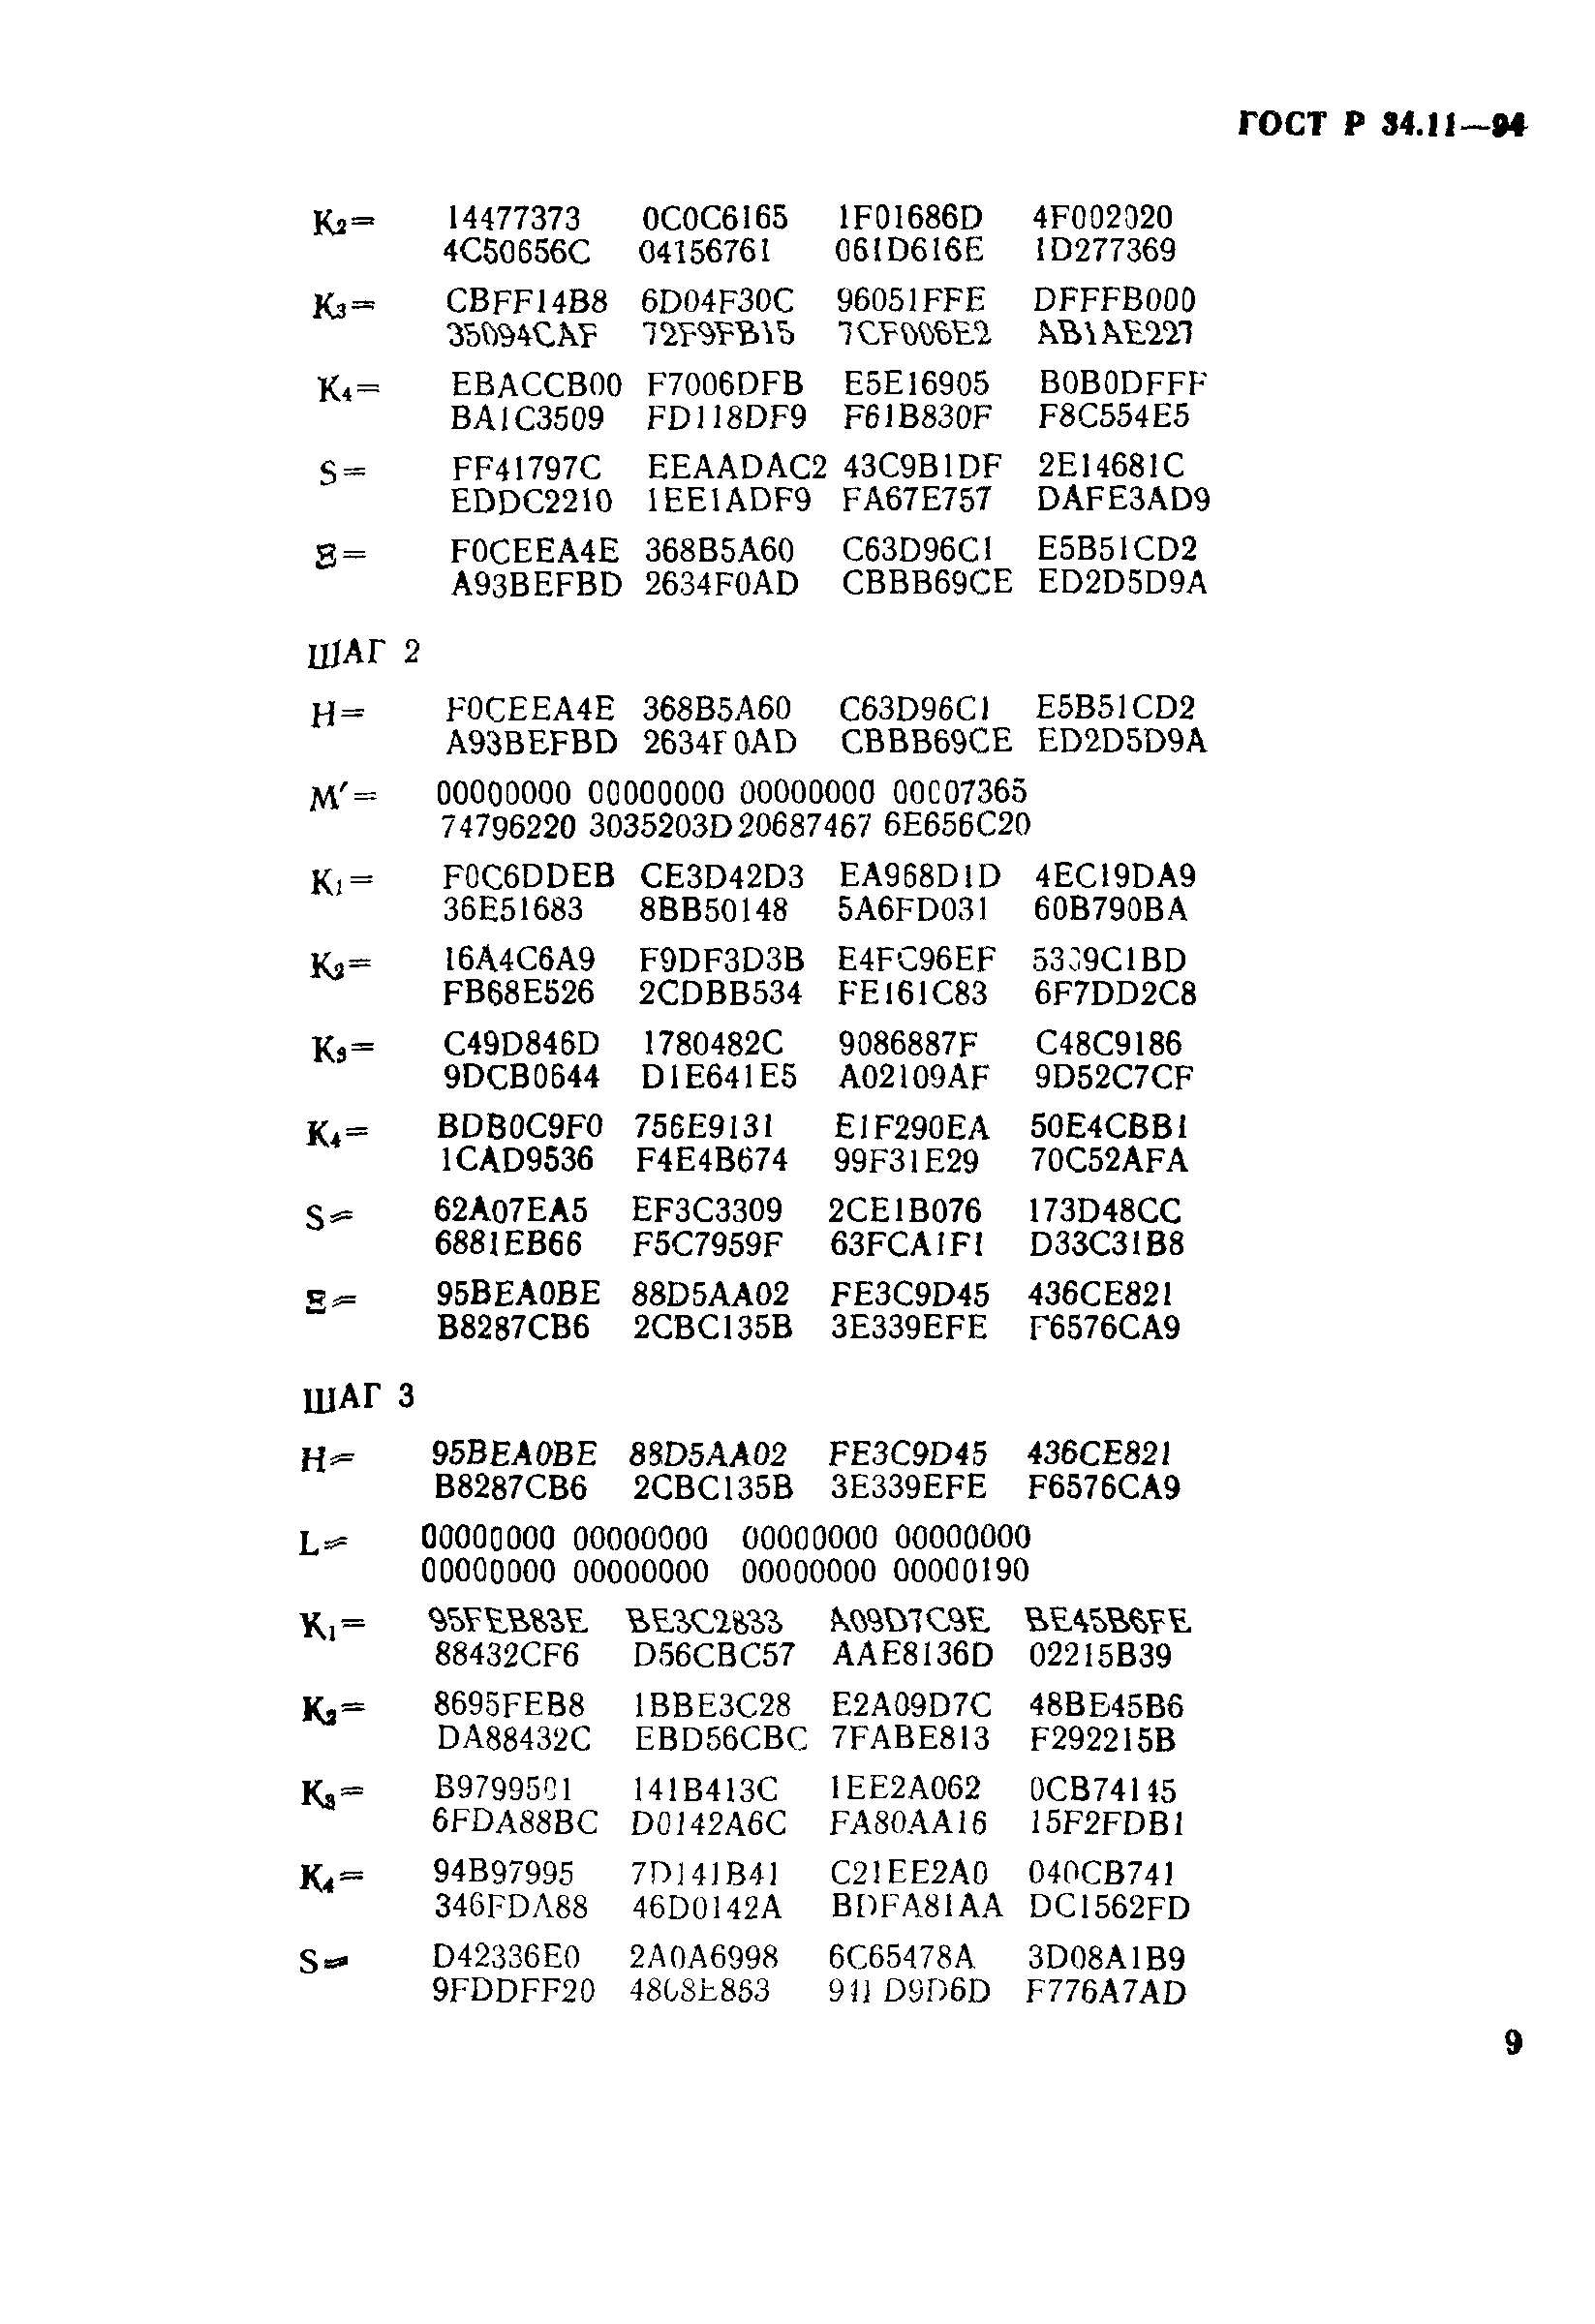 ГОСТ Р 34.11-94